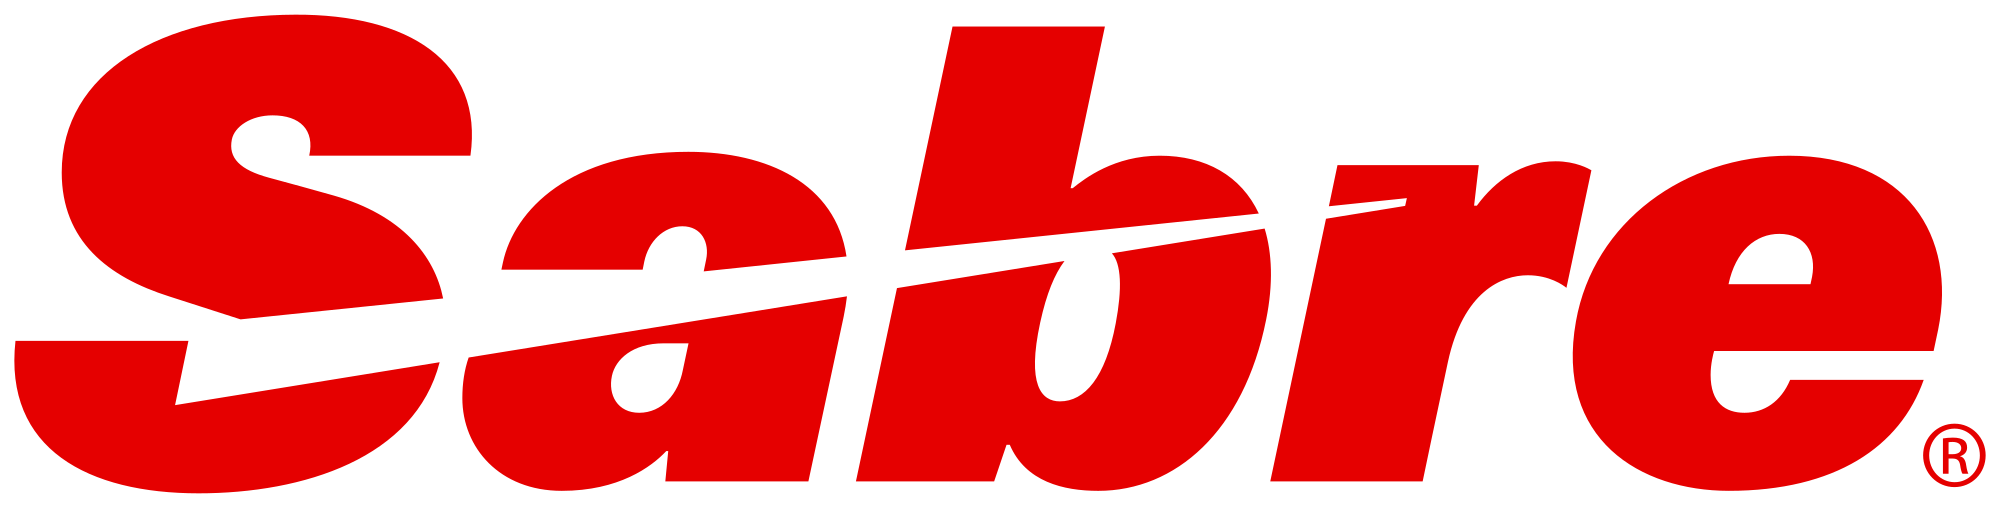 Sabre Corporation Logo - File:Sabre Corporation logo.svg - Wikimedia Commons